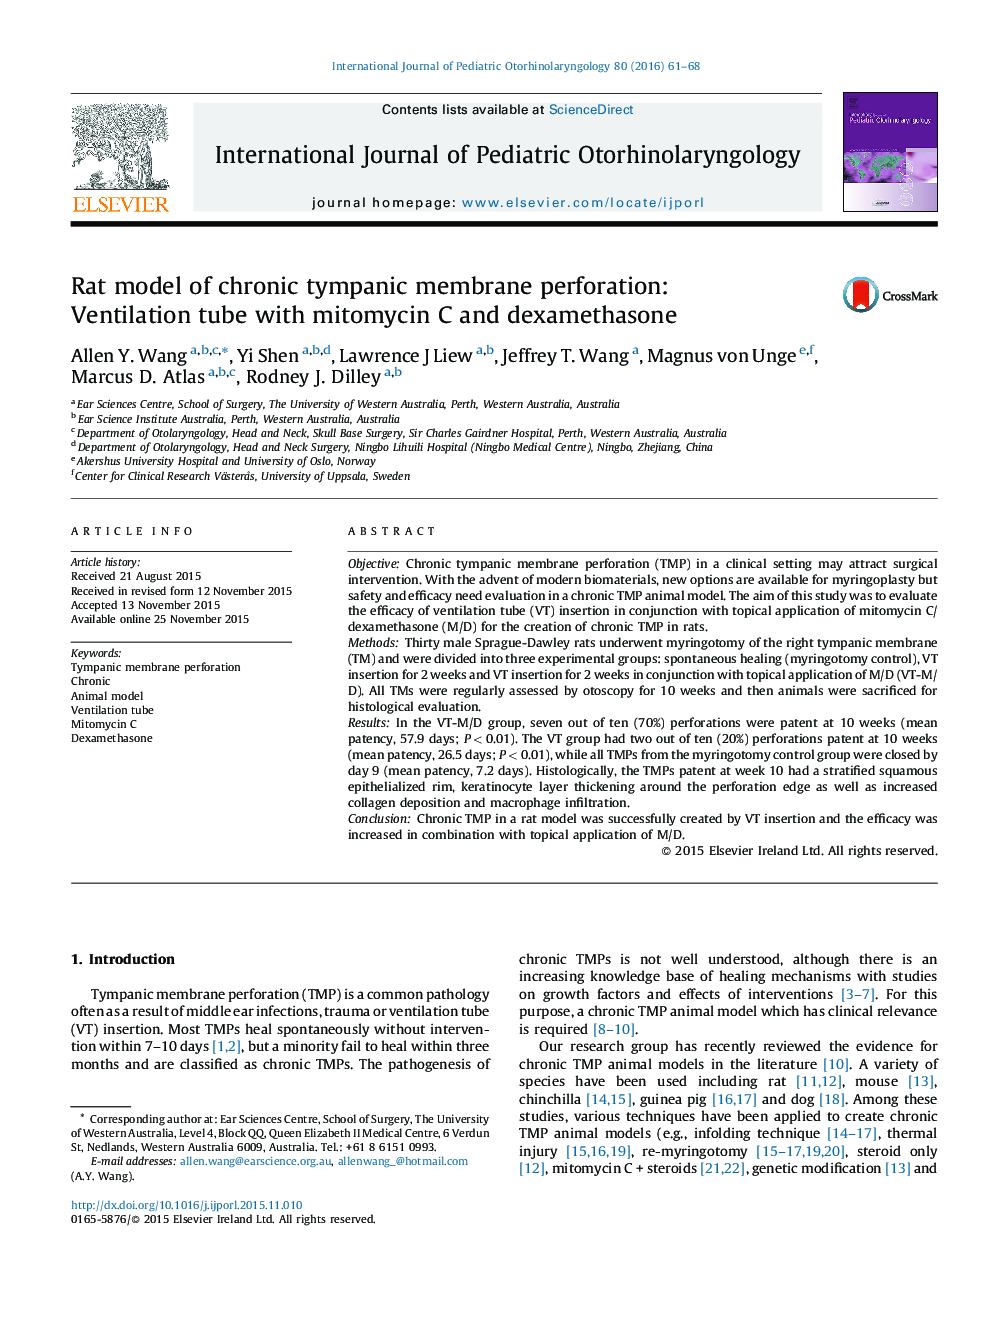 Rat model of chronic tympanic membrane perforation: Ventilation tube with mitomycin C and dexamethasone